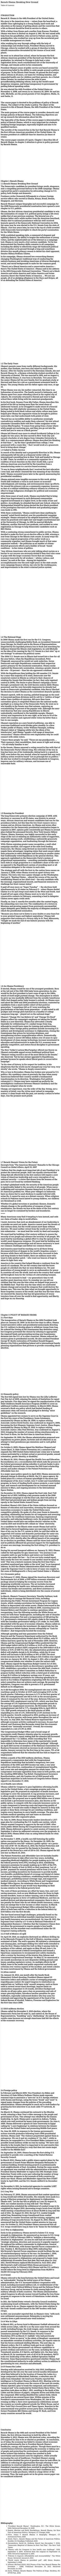 Barack Obama: Breaking New Ground